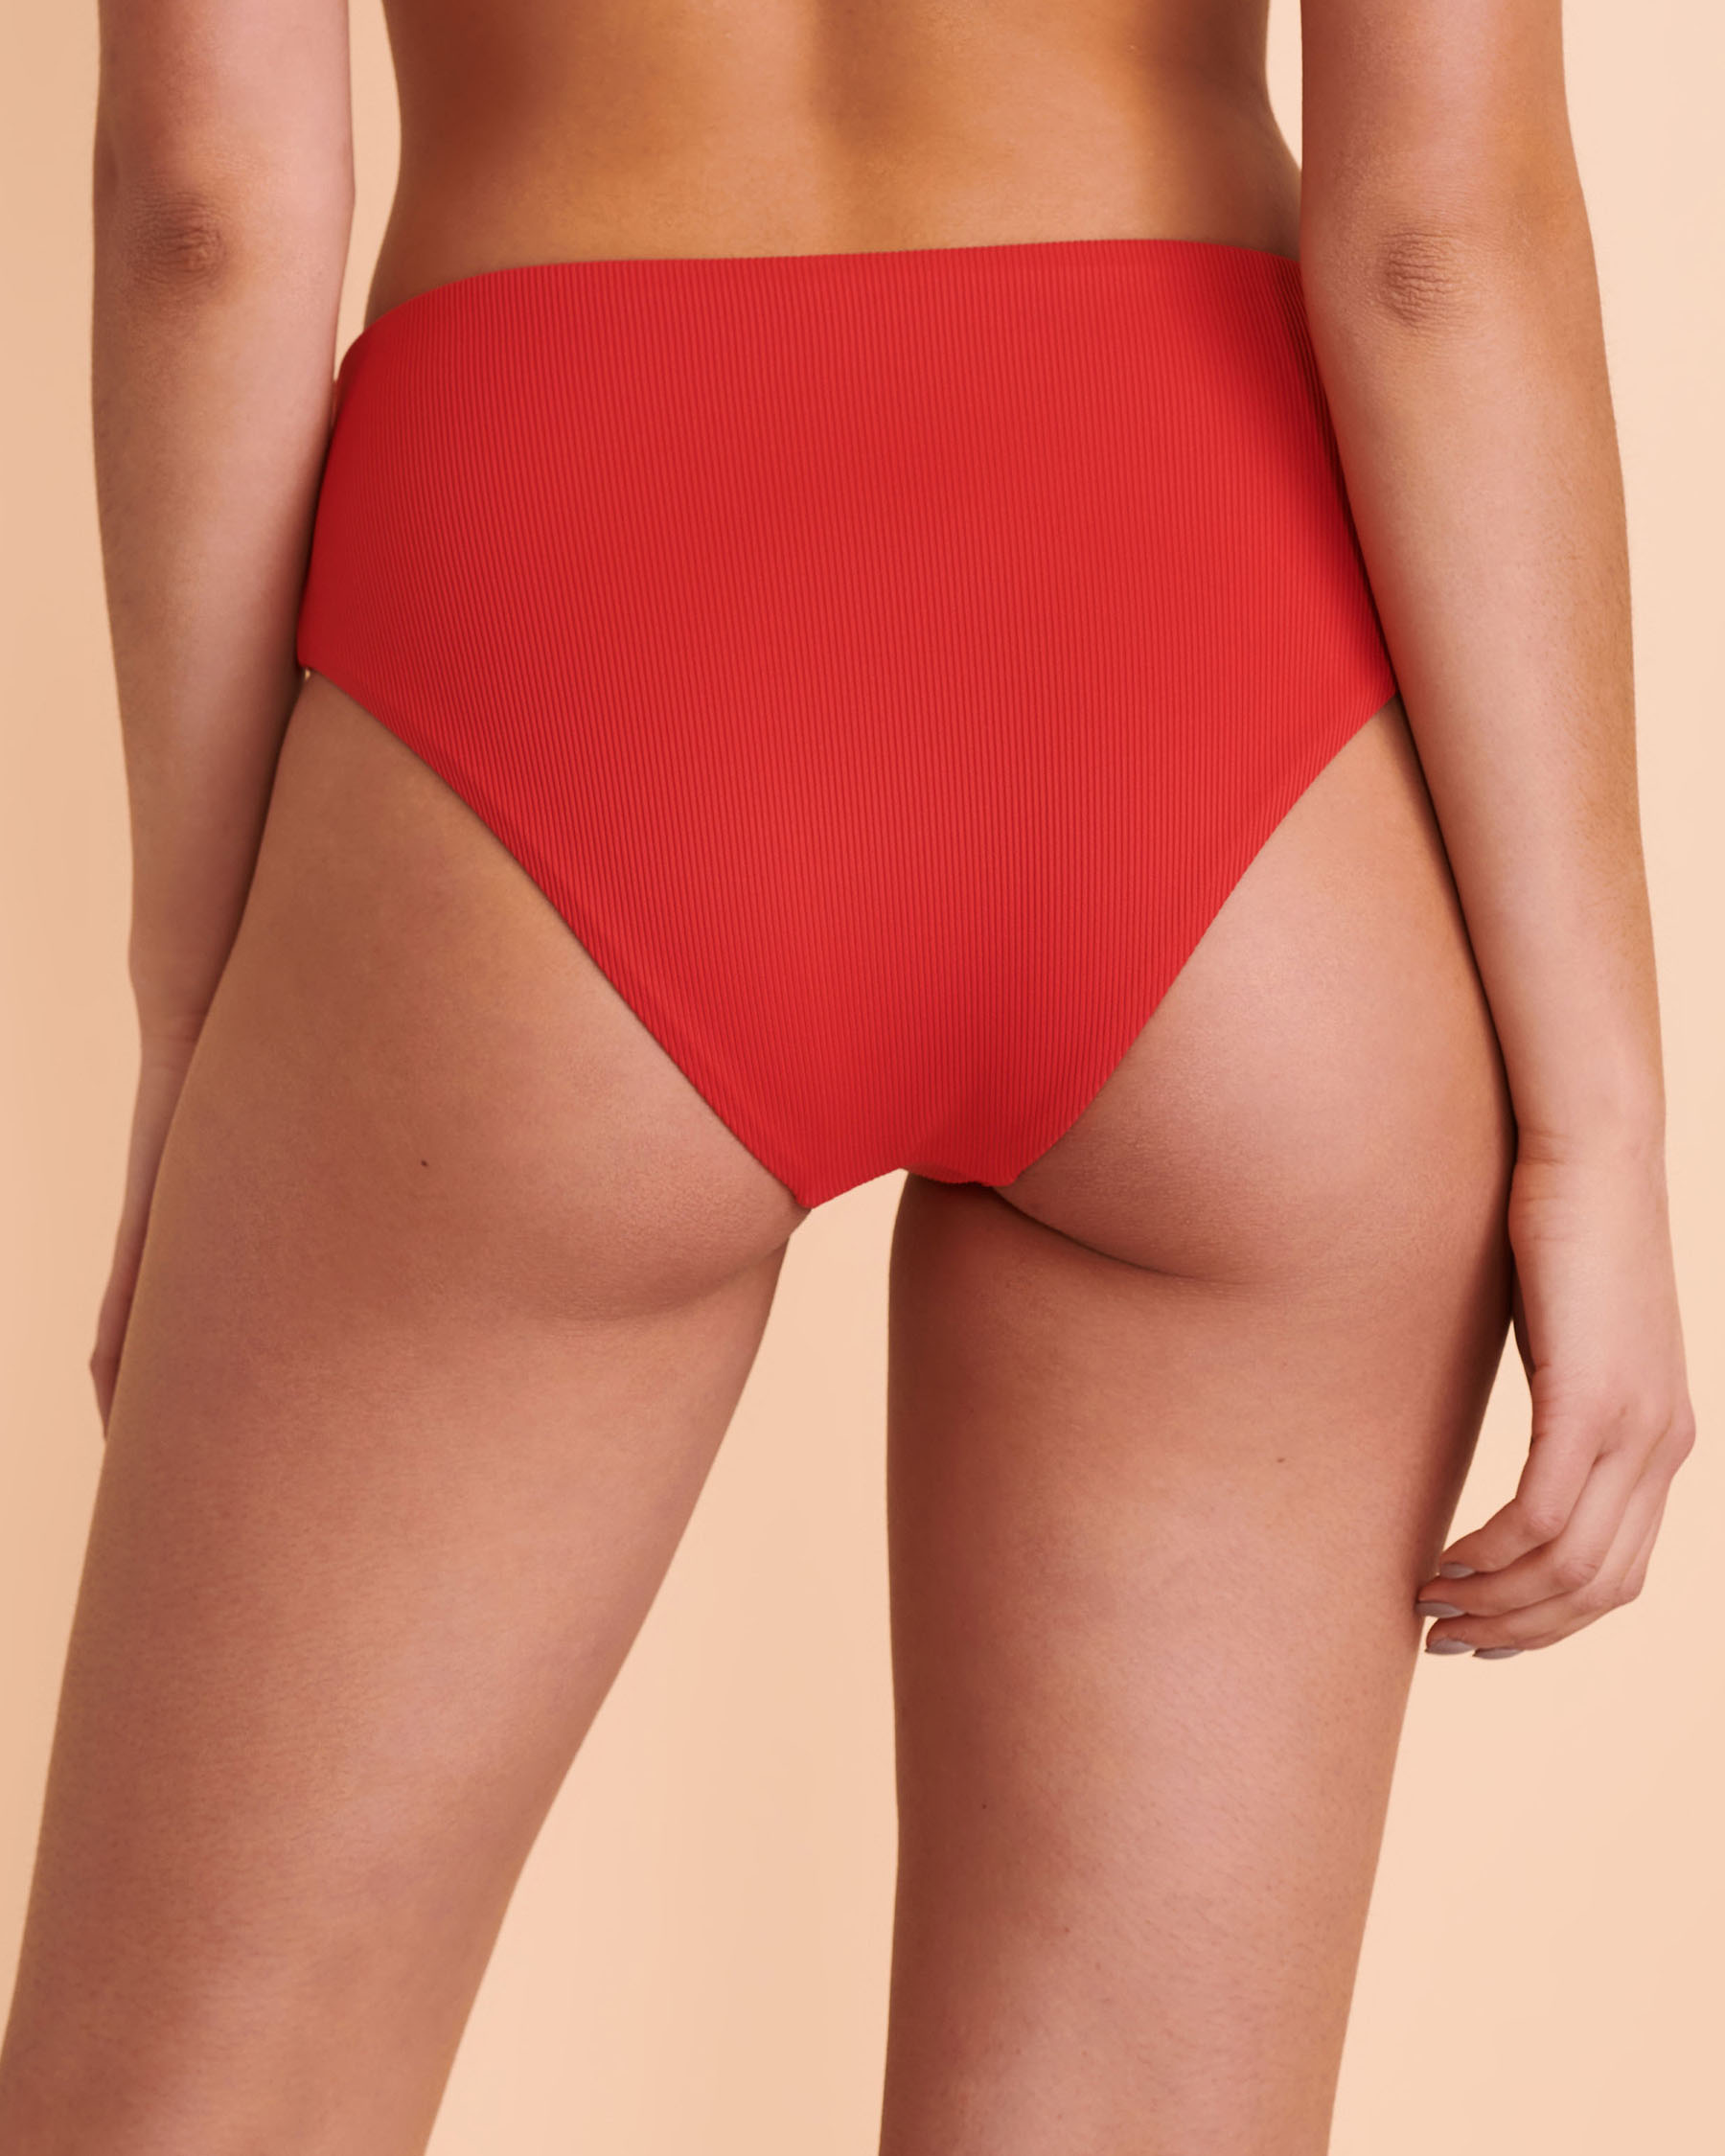 QUINTSOUL MALIBU High Waist Bikini Bottom Red BV21005010 - View2